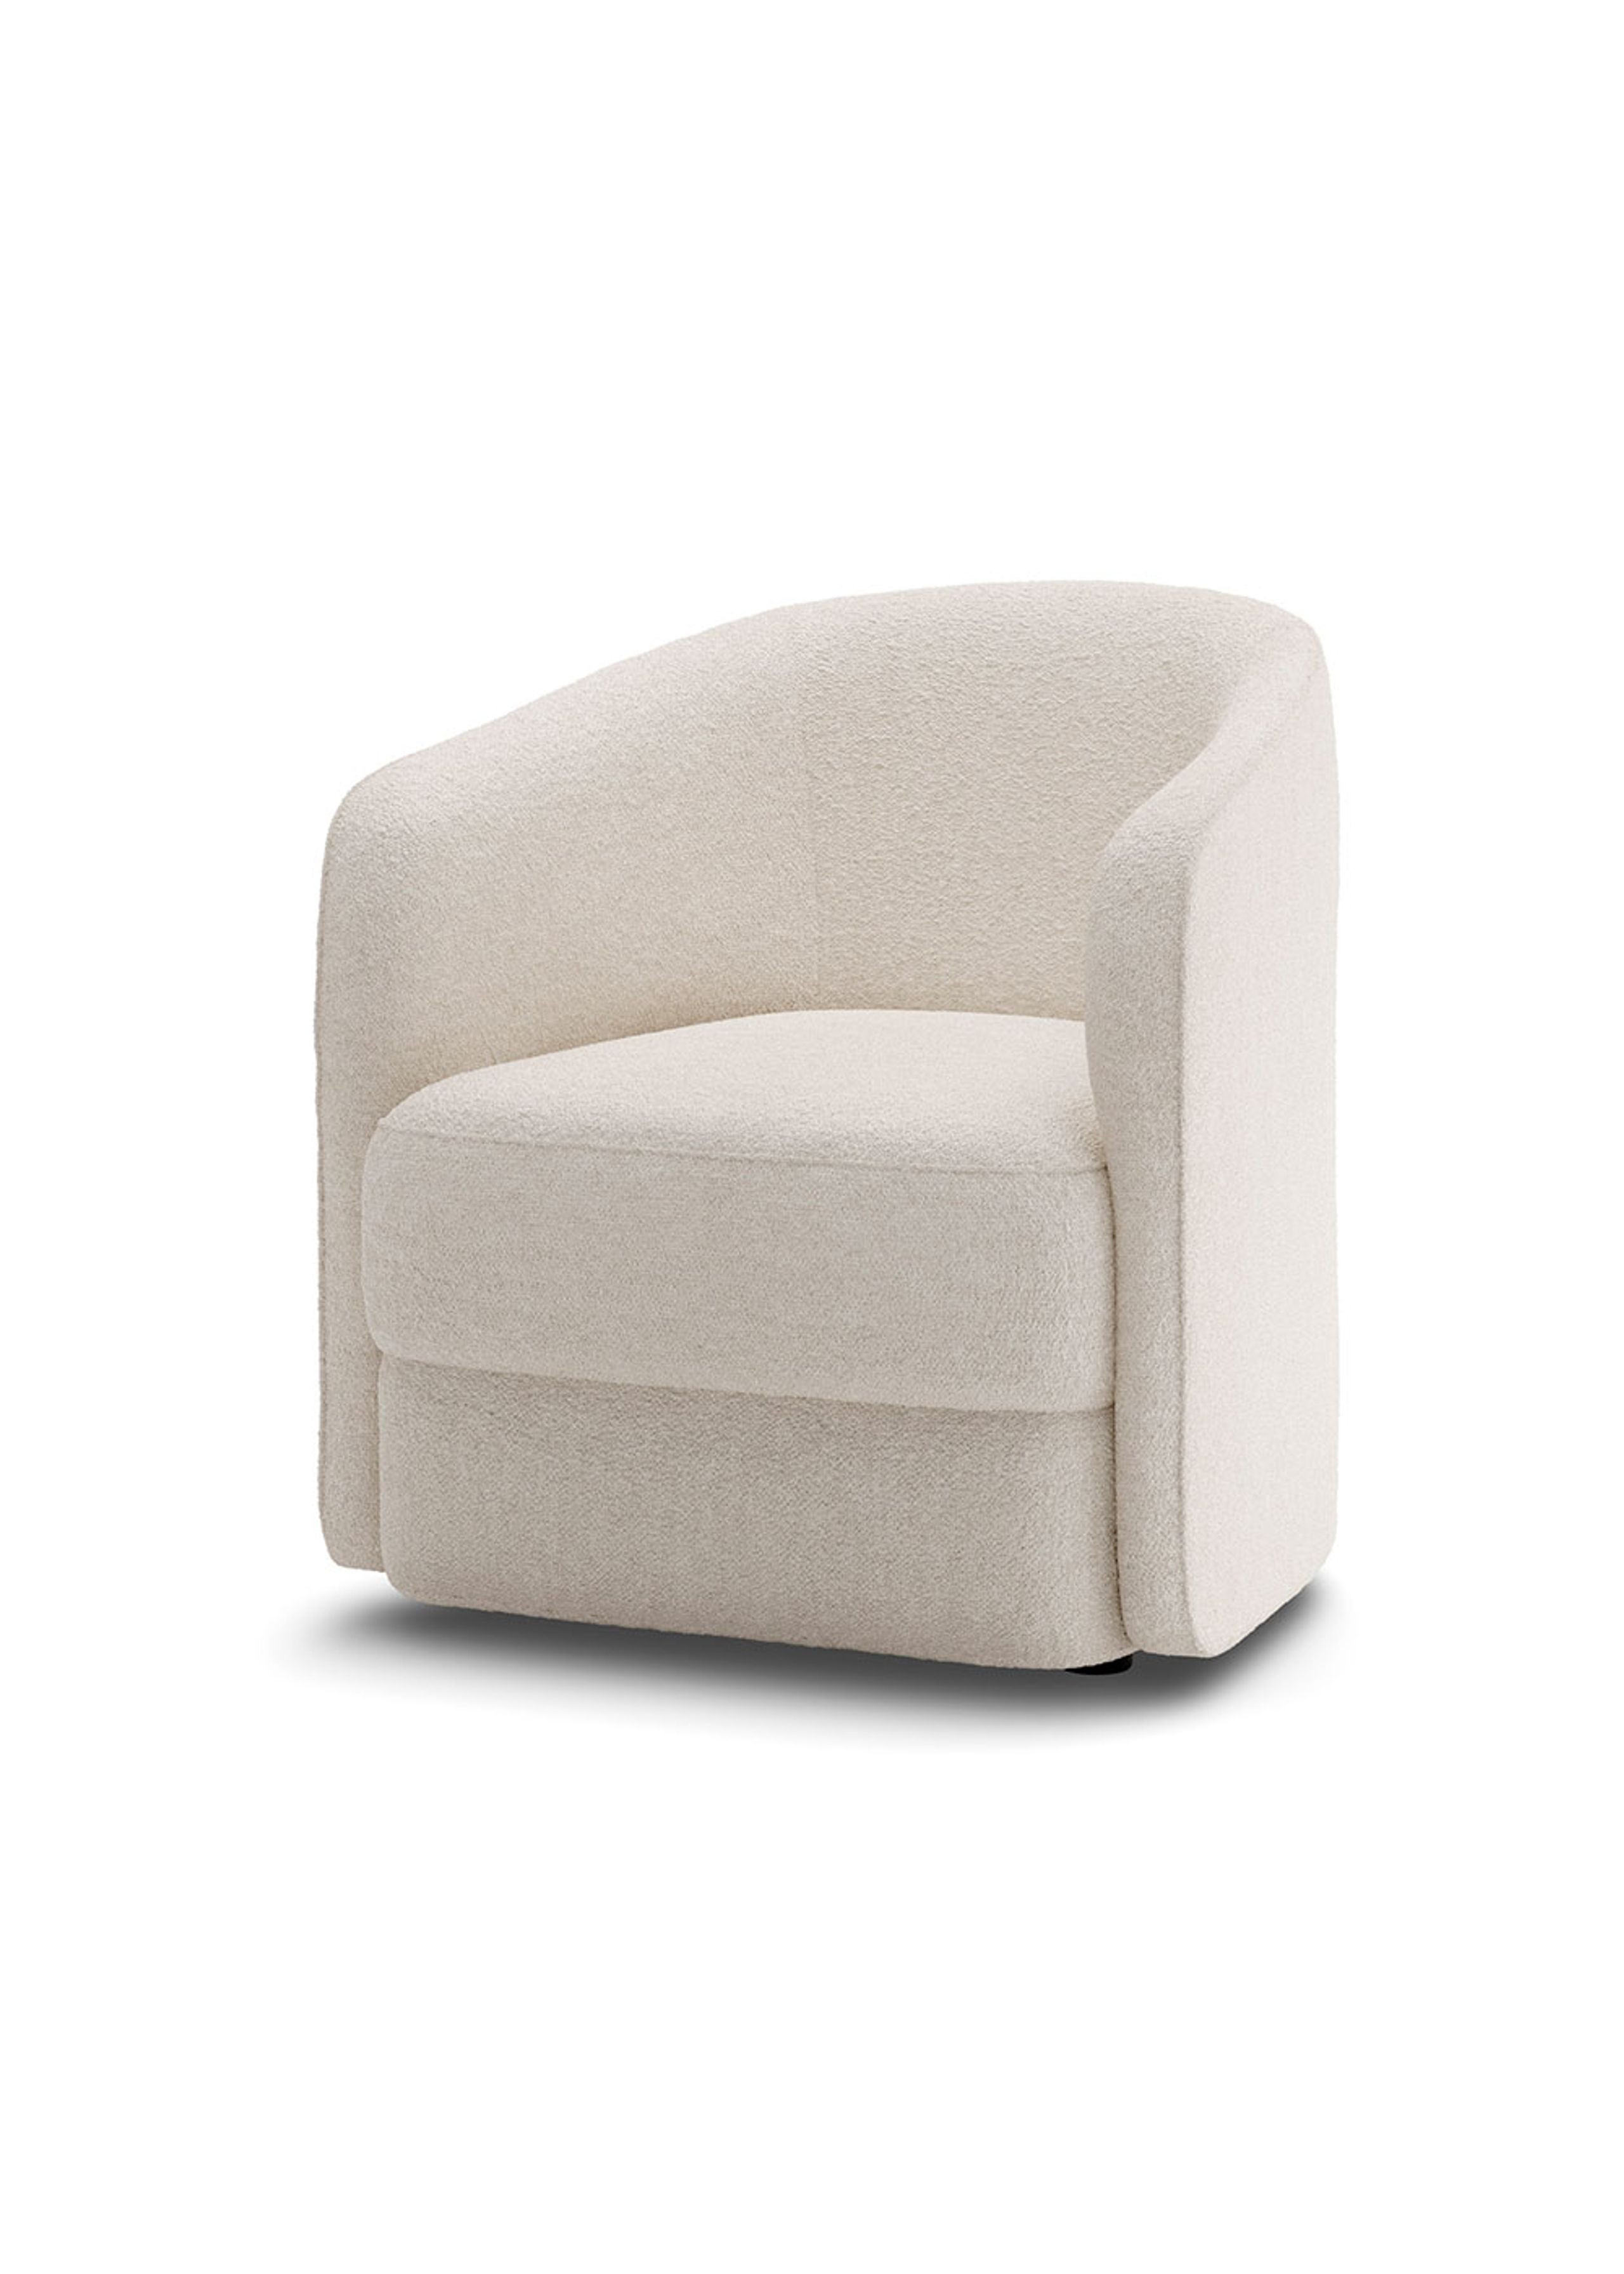 New Works - Poltrona - Covent Lounge Chair Narrow - Nevotex Barnum Lana 24